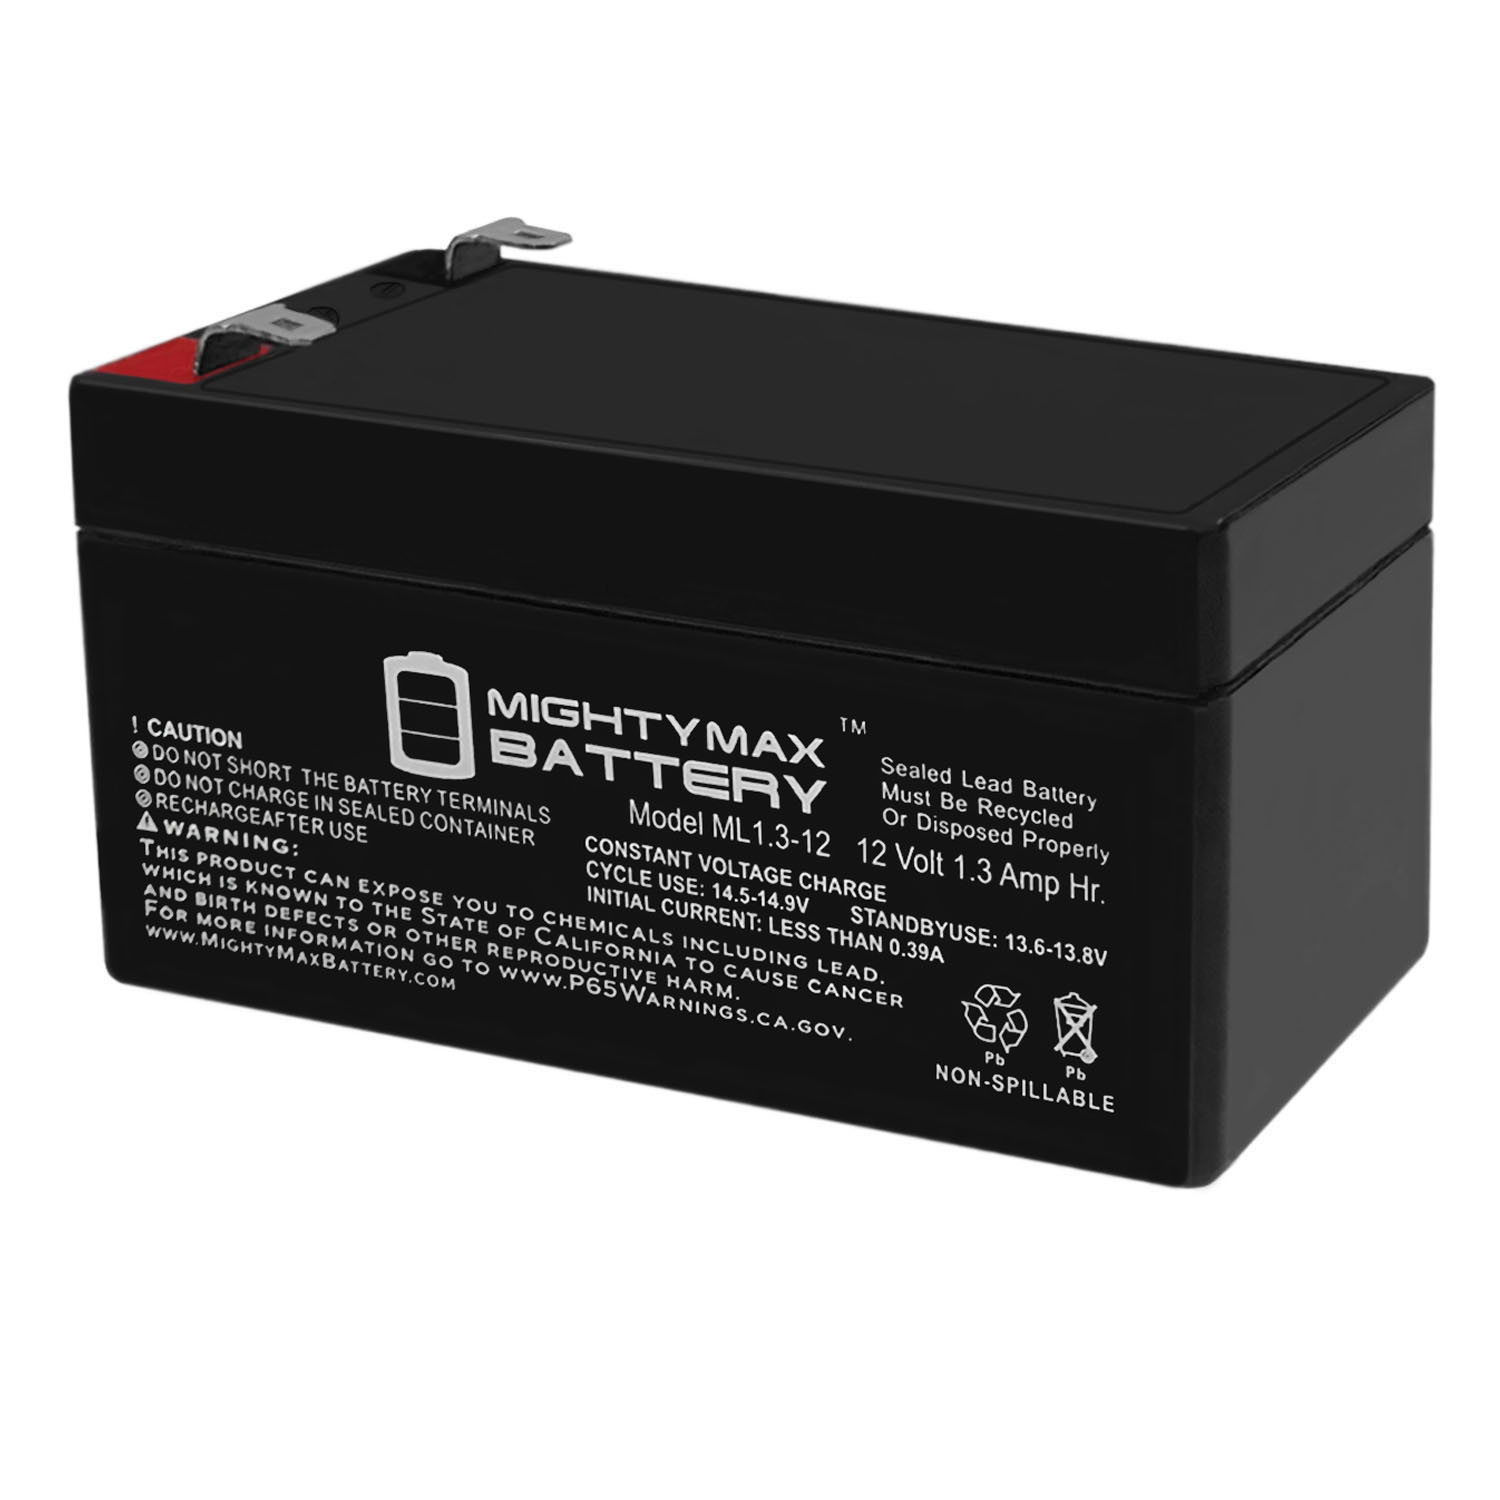 Ritar rt1213. ARMSTAR Max 12v. Mightiness Battery Pack 4.8v.